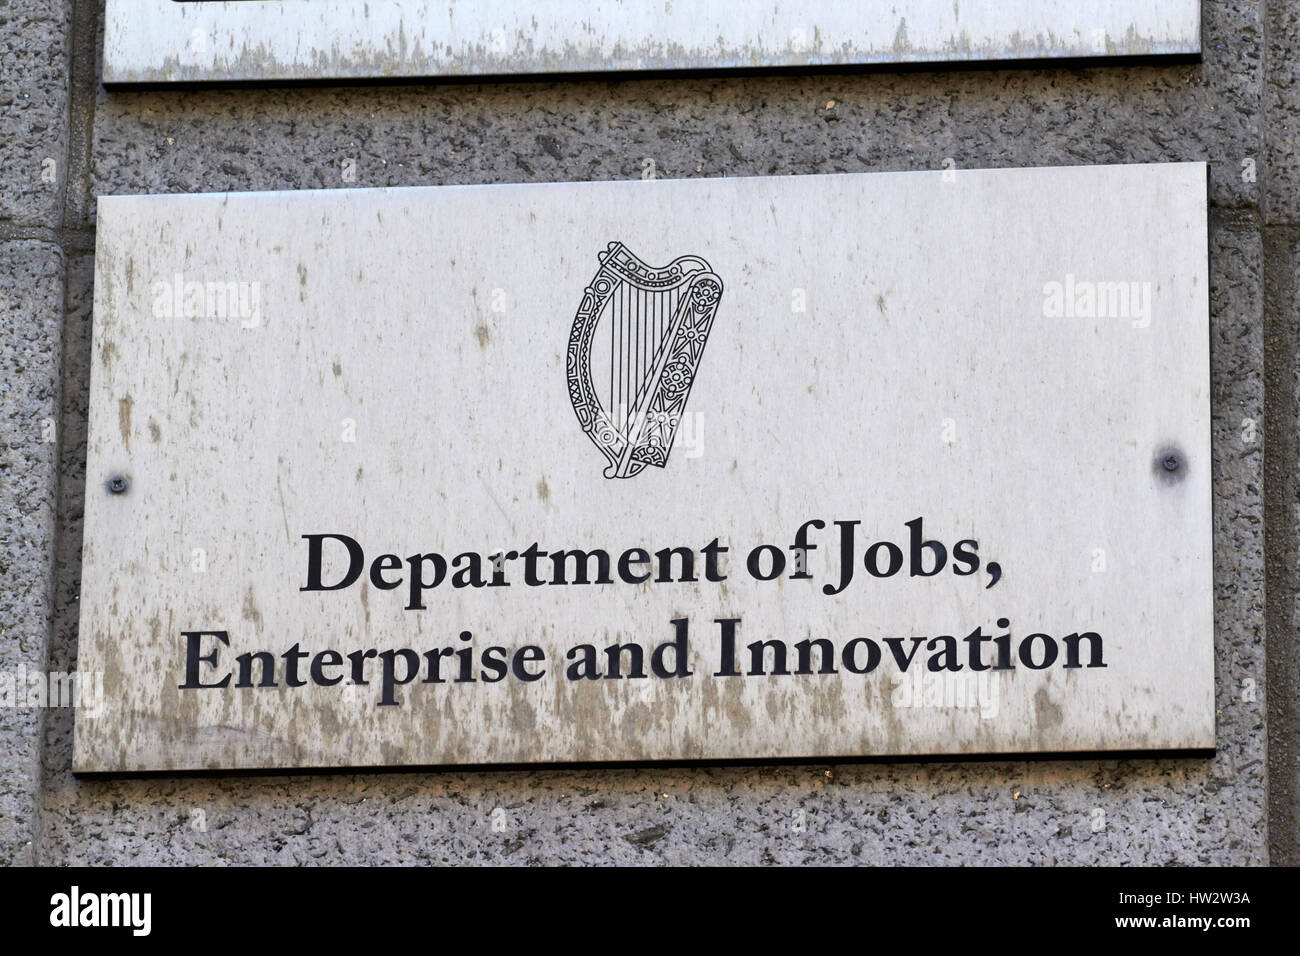 department of jobs enterprise and innovation Dublin Republic of Ireland Stock Photo